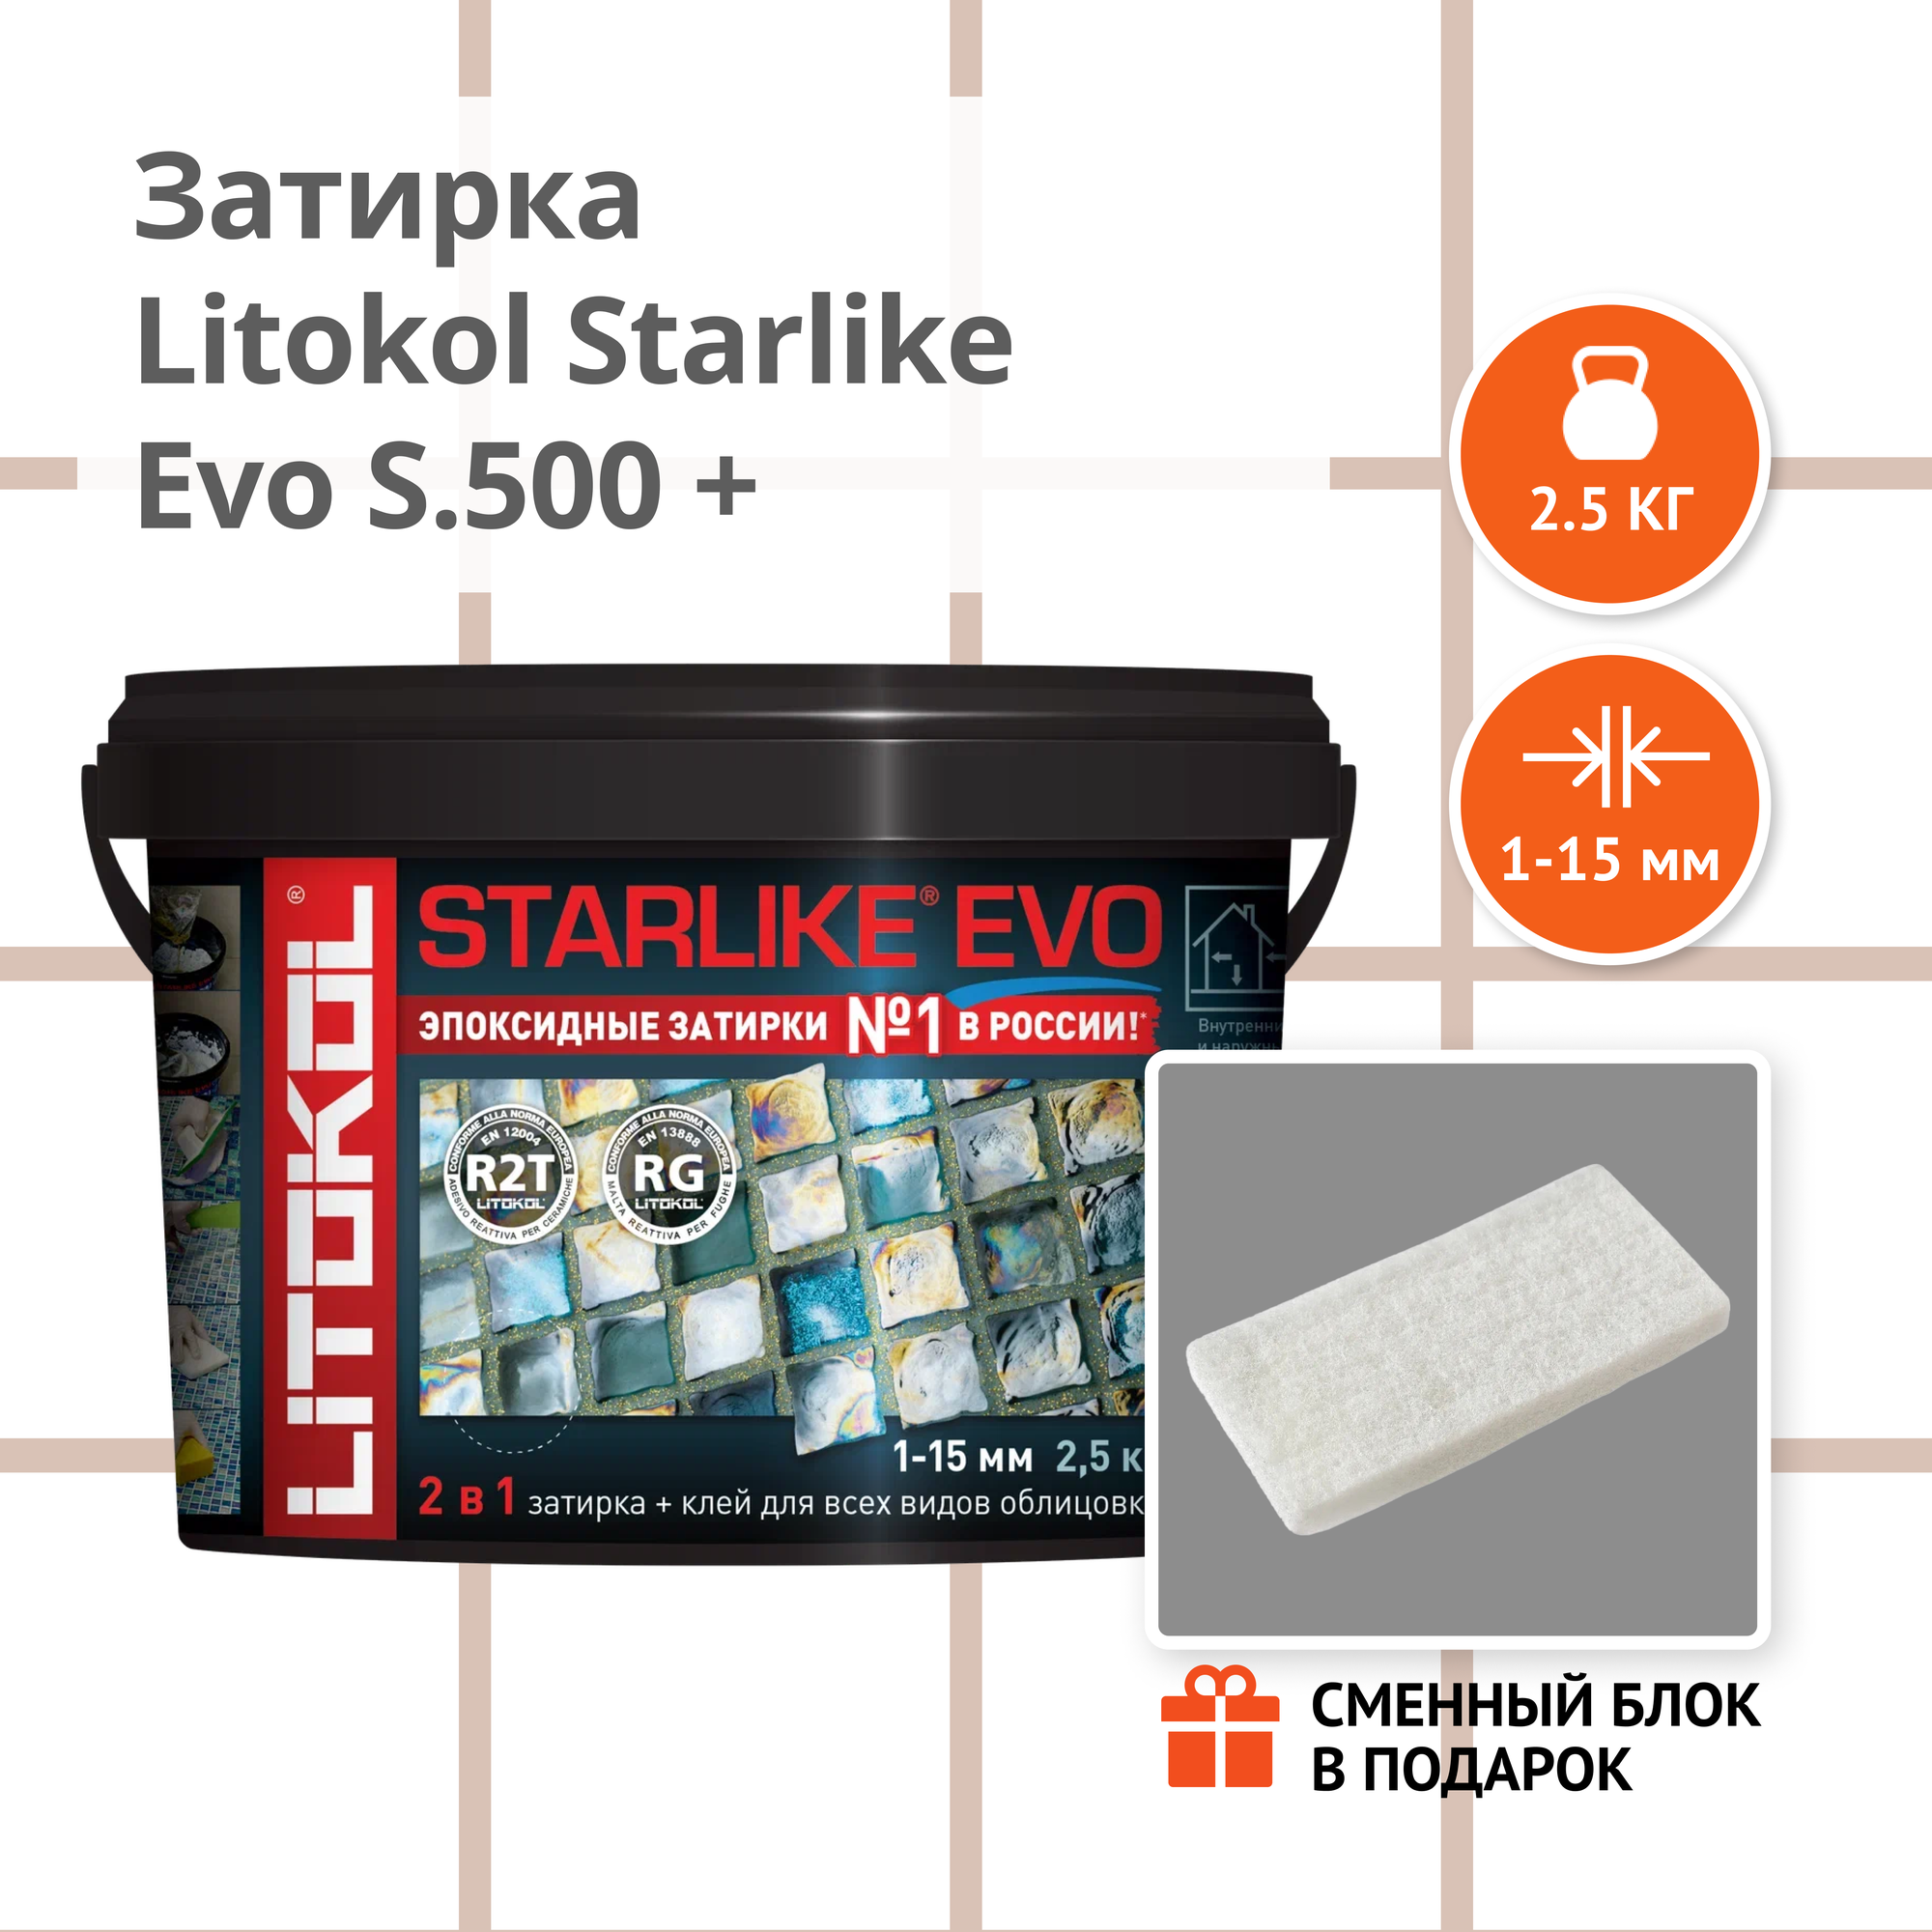 Затирка LITOKOL STARLIKE EVO S.320 AZZURRO CARAIBI 2.5 кг + Сменный блок в подарок